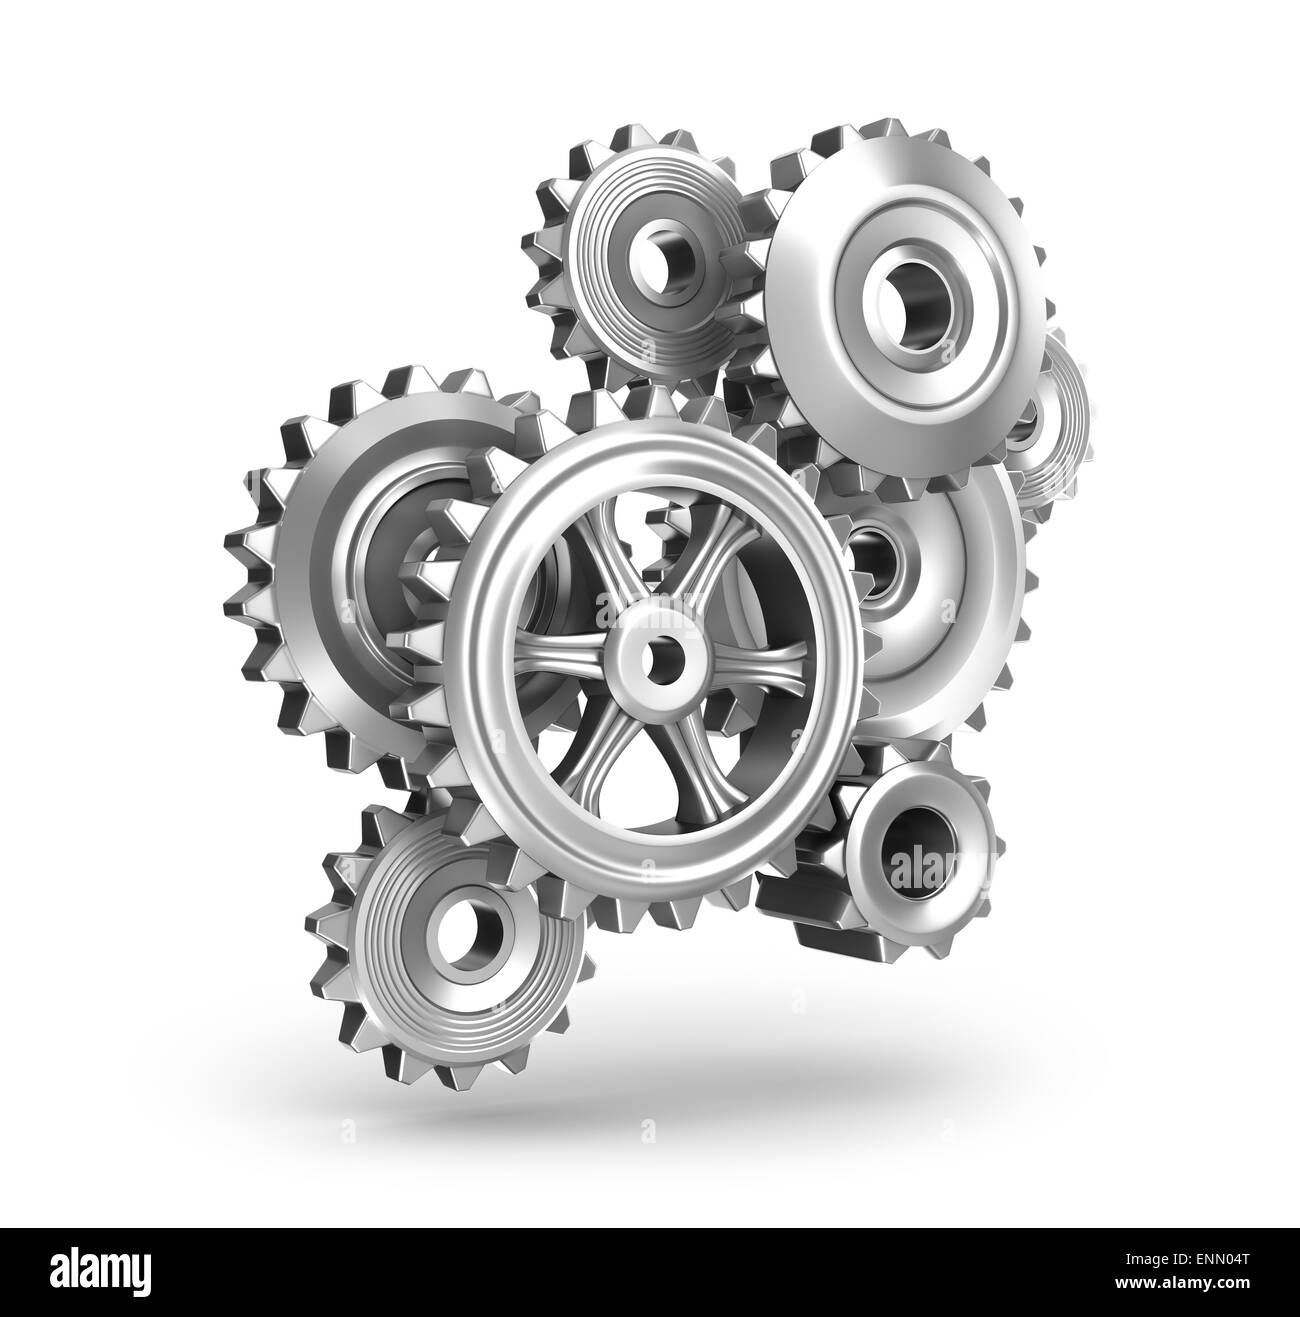 Steel gear wheels concept Stock Photo